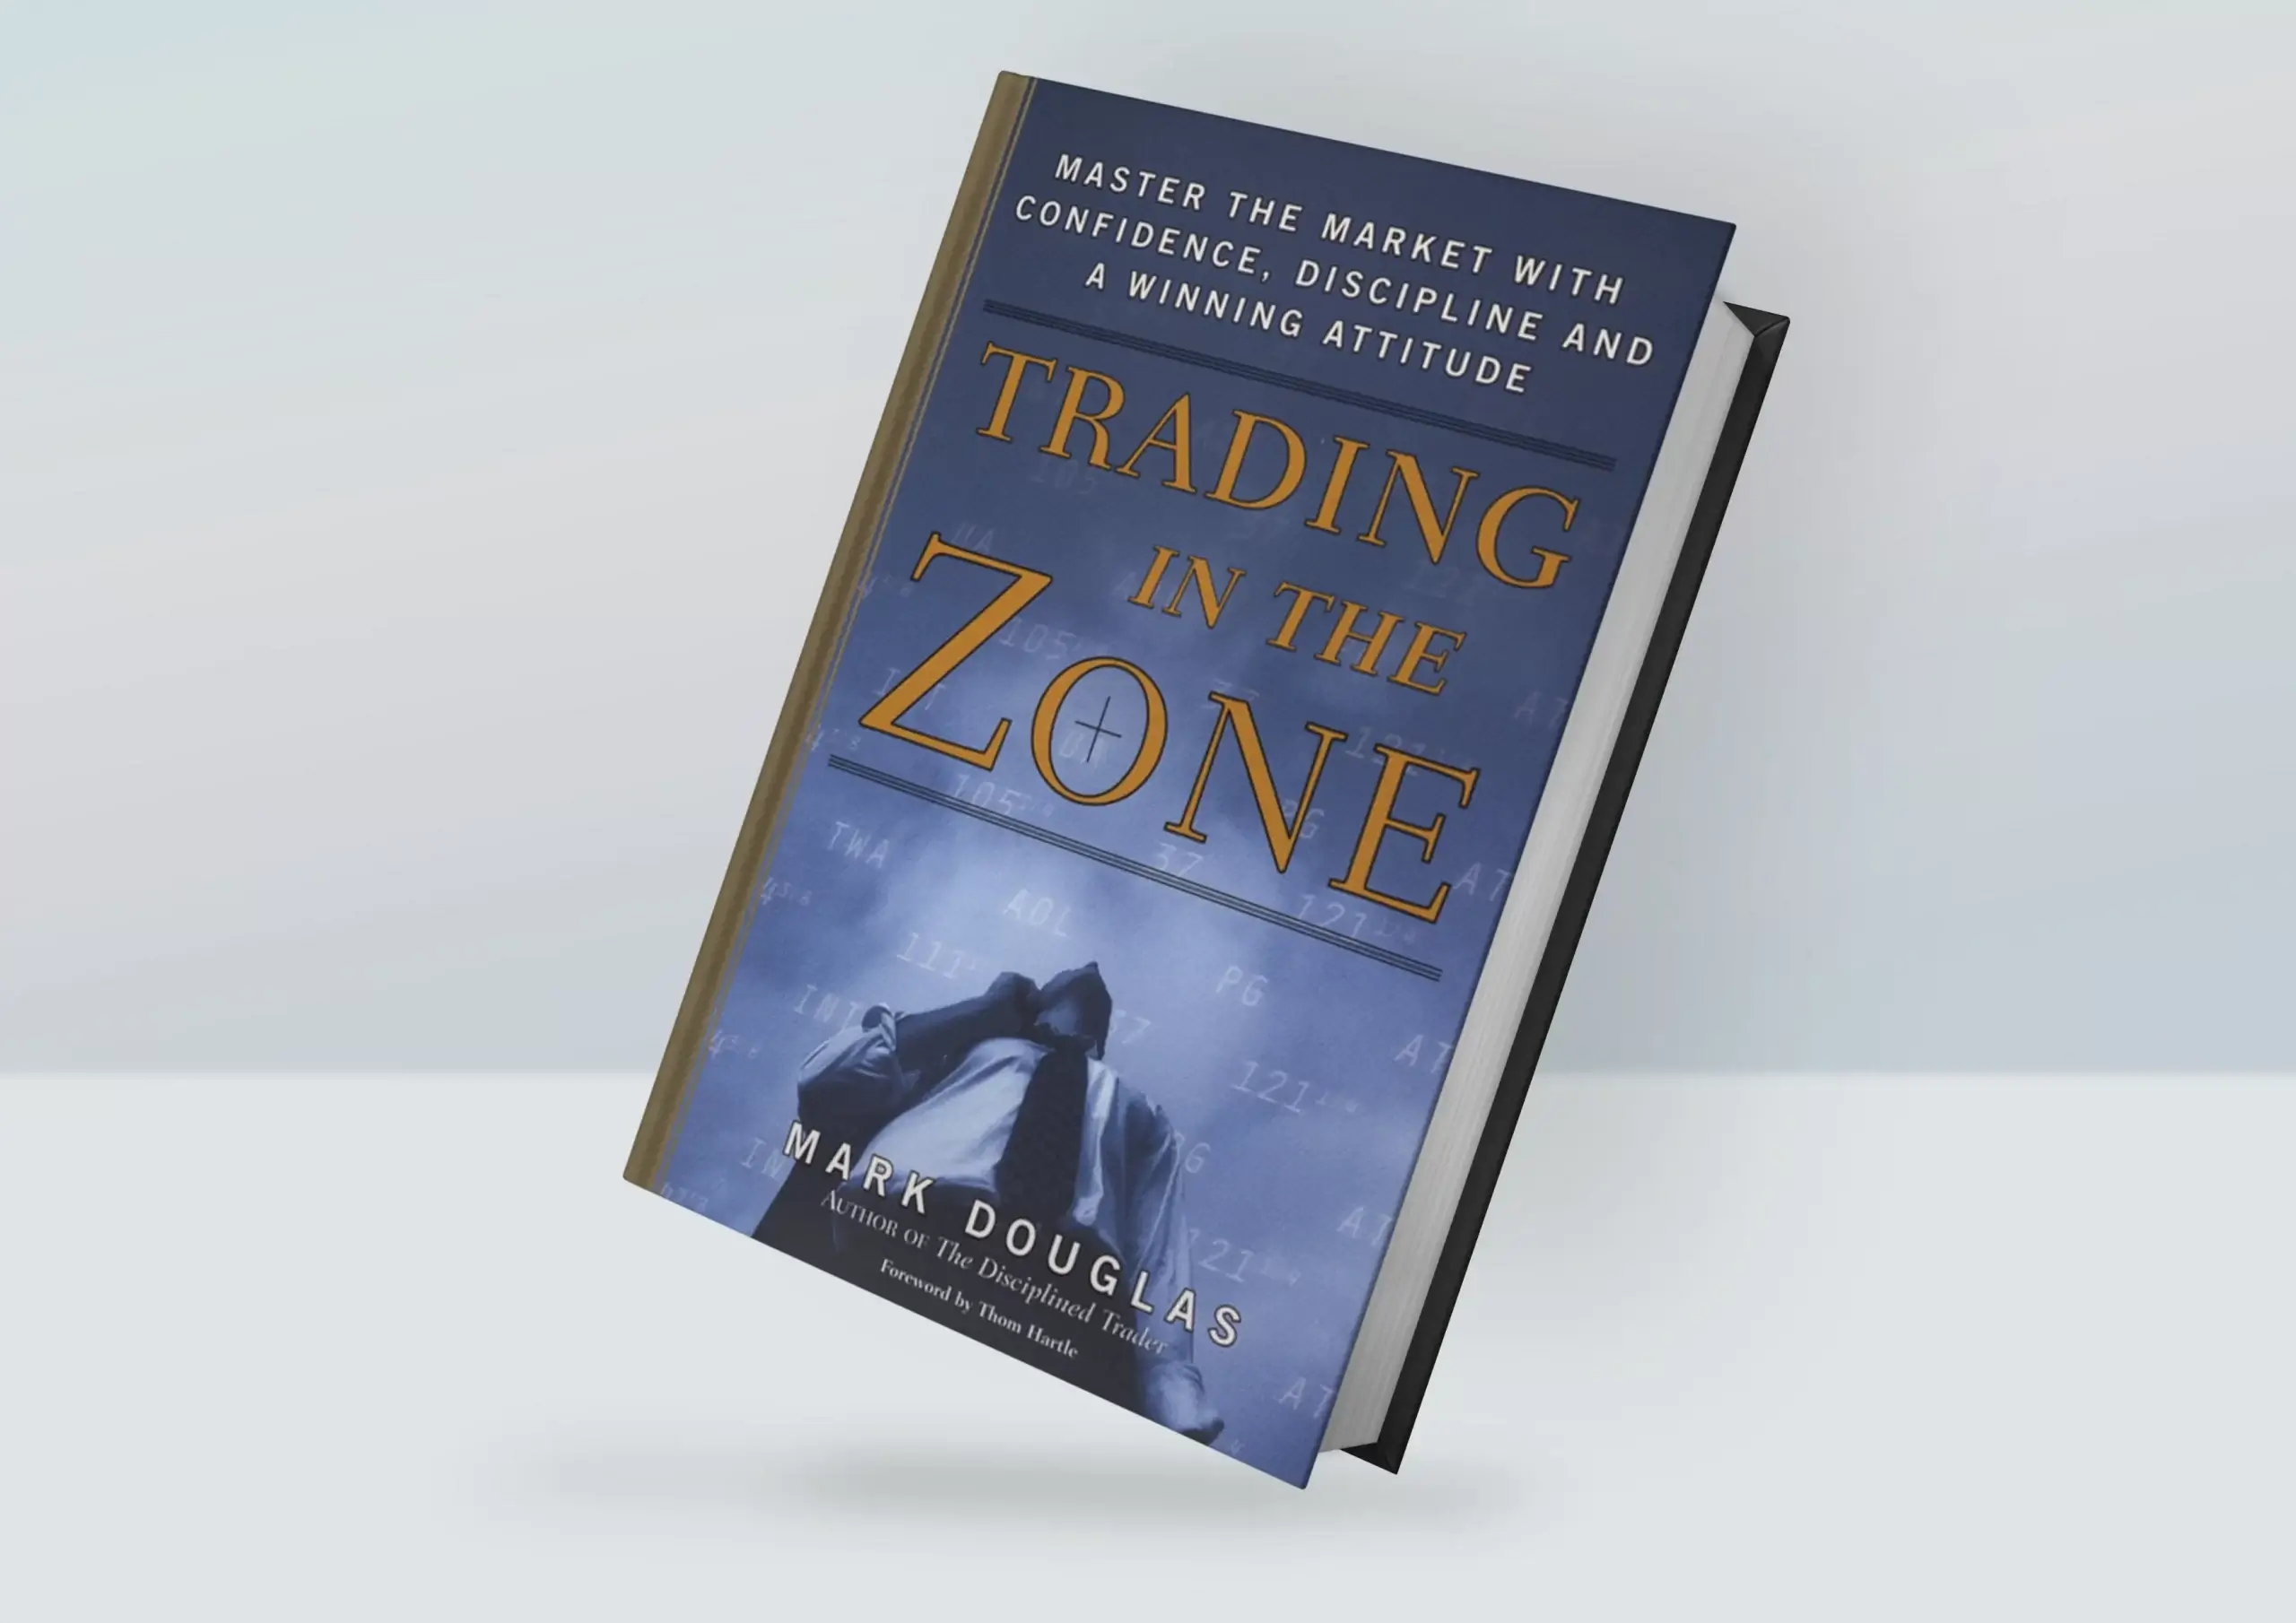 کتاب “Trading in the Zone” اثر مارک داگلاس